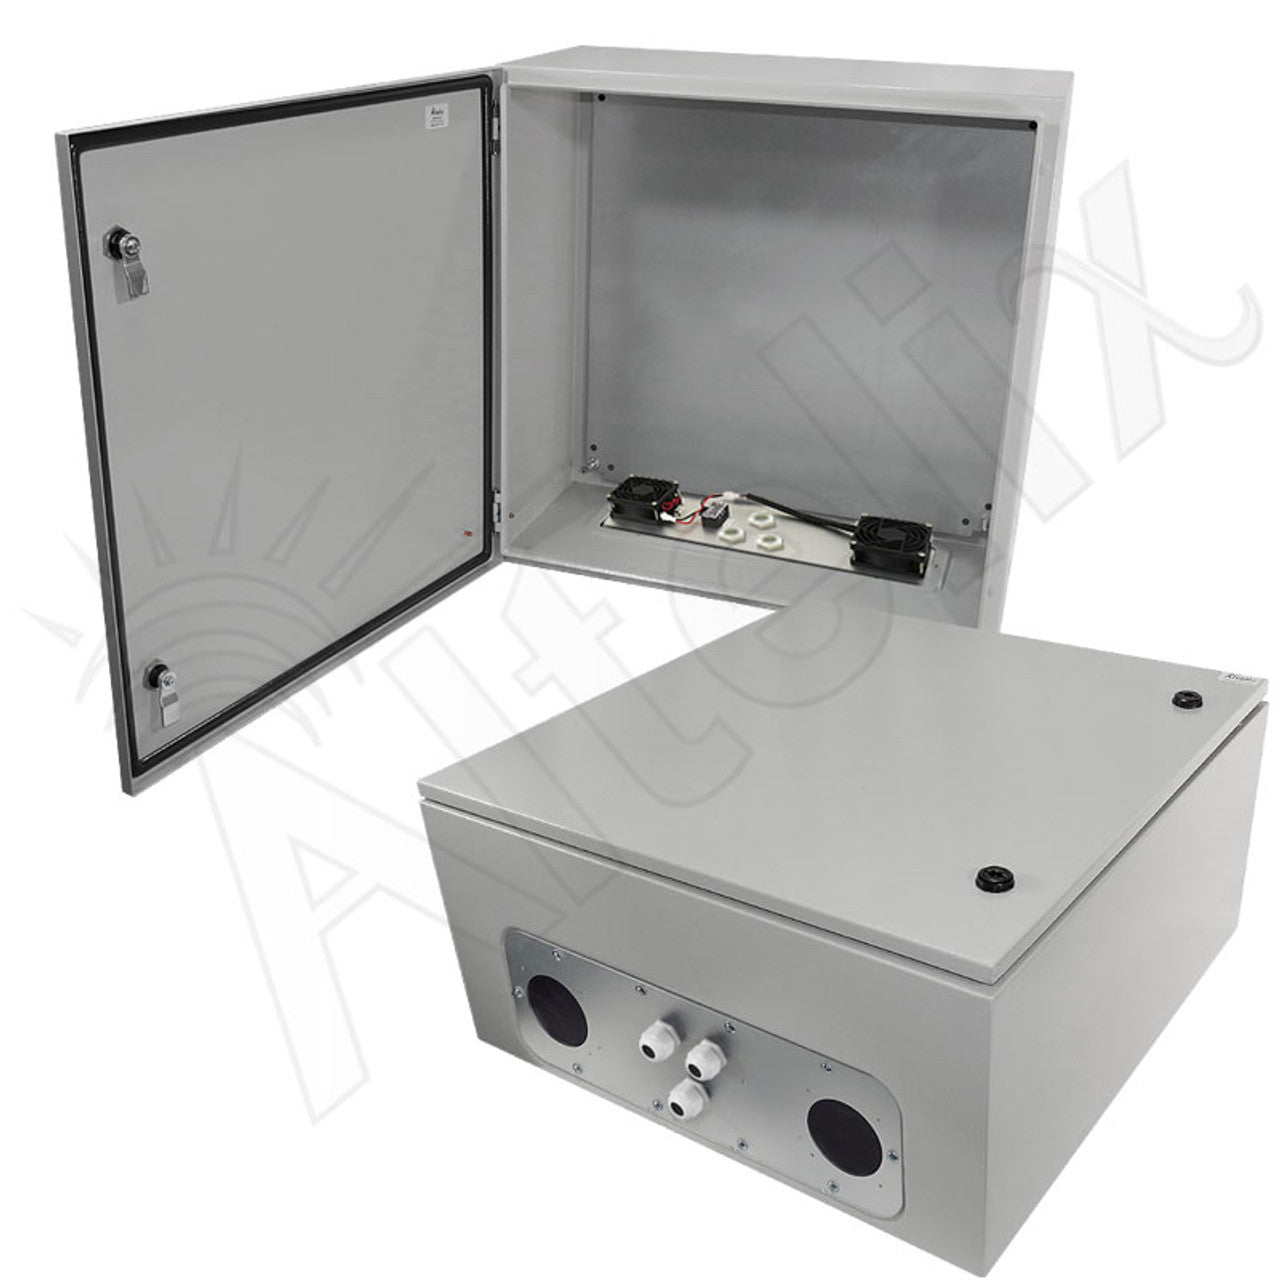 Altelix Steel Weatherproof NEMA Enclosure with Dual 24 VDC Cooling Fans-1